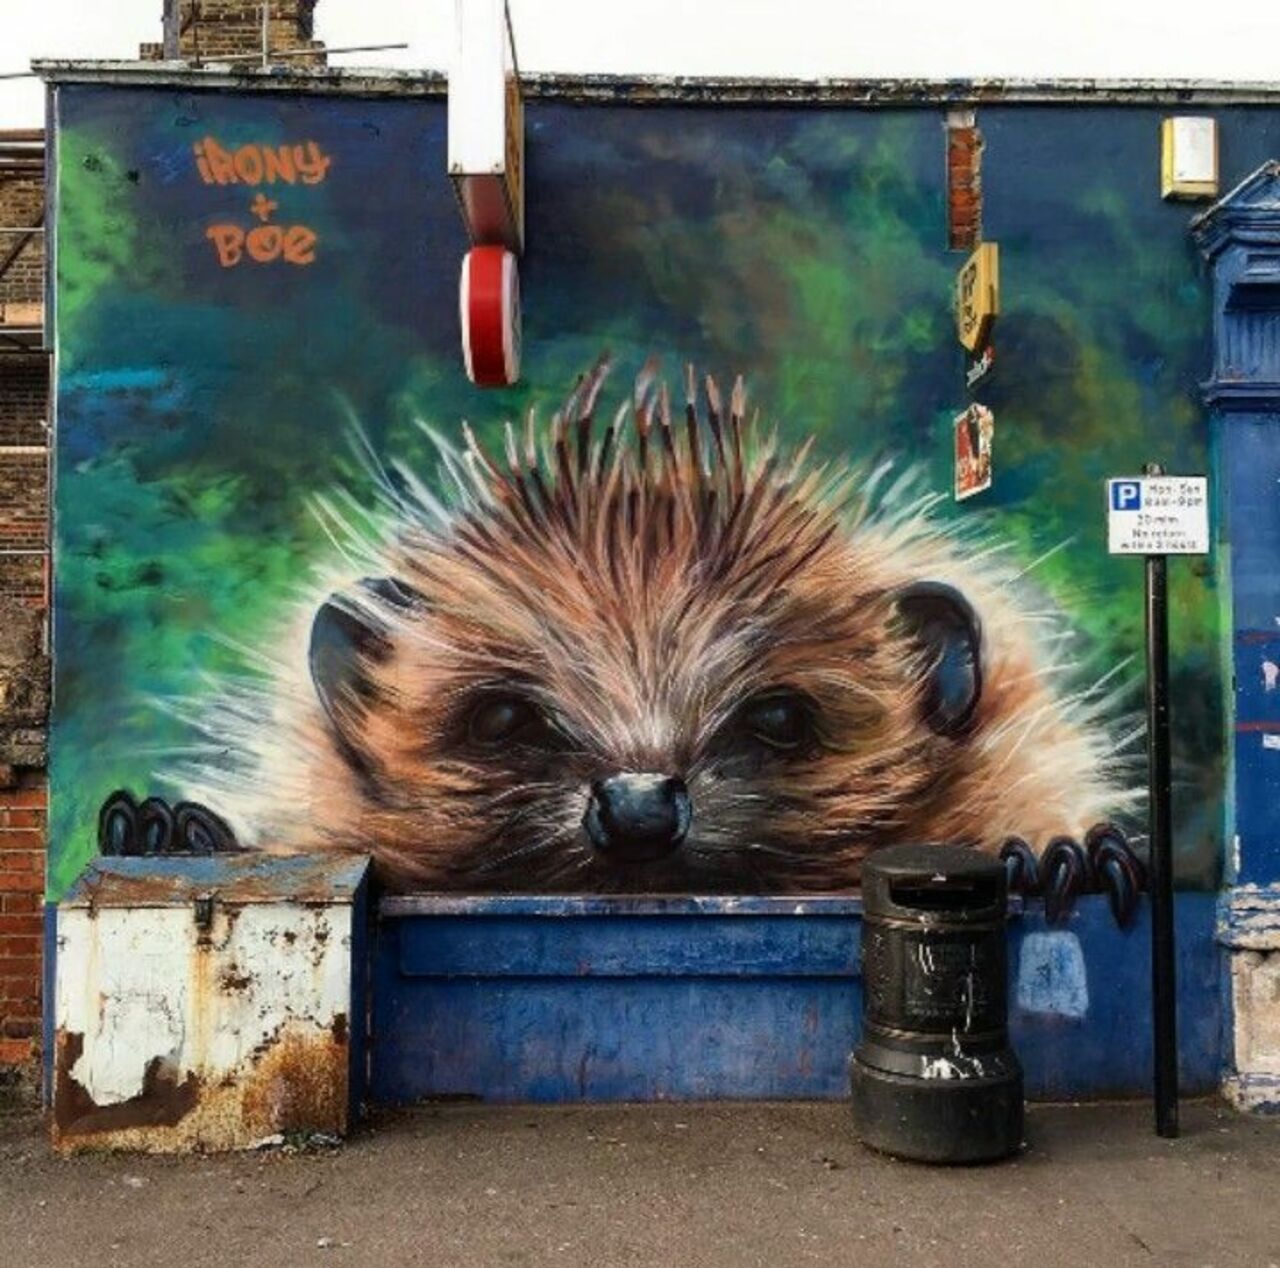 Mural by Whoamirony & Boe, located in London, UK#streetart #mural #graffiti #art https://t.co/DkzeeG9Uca